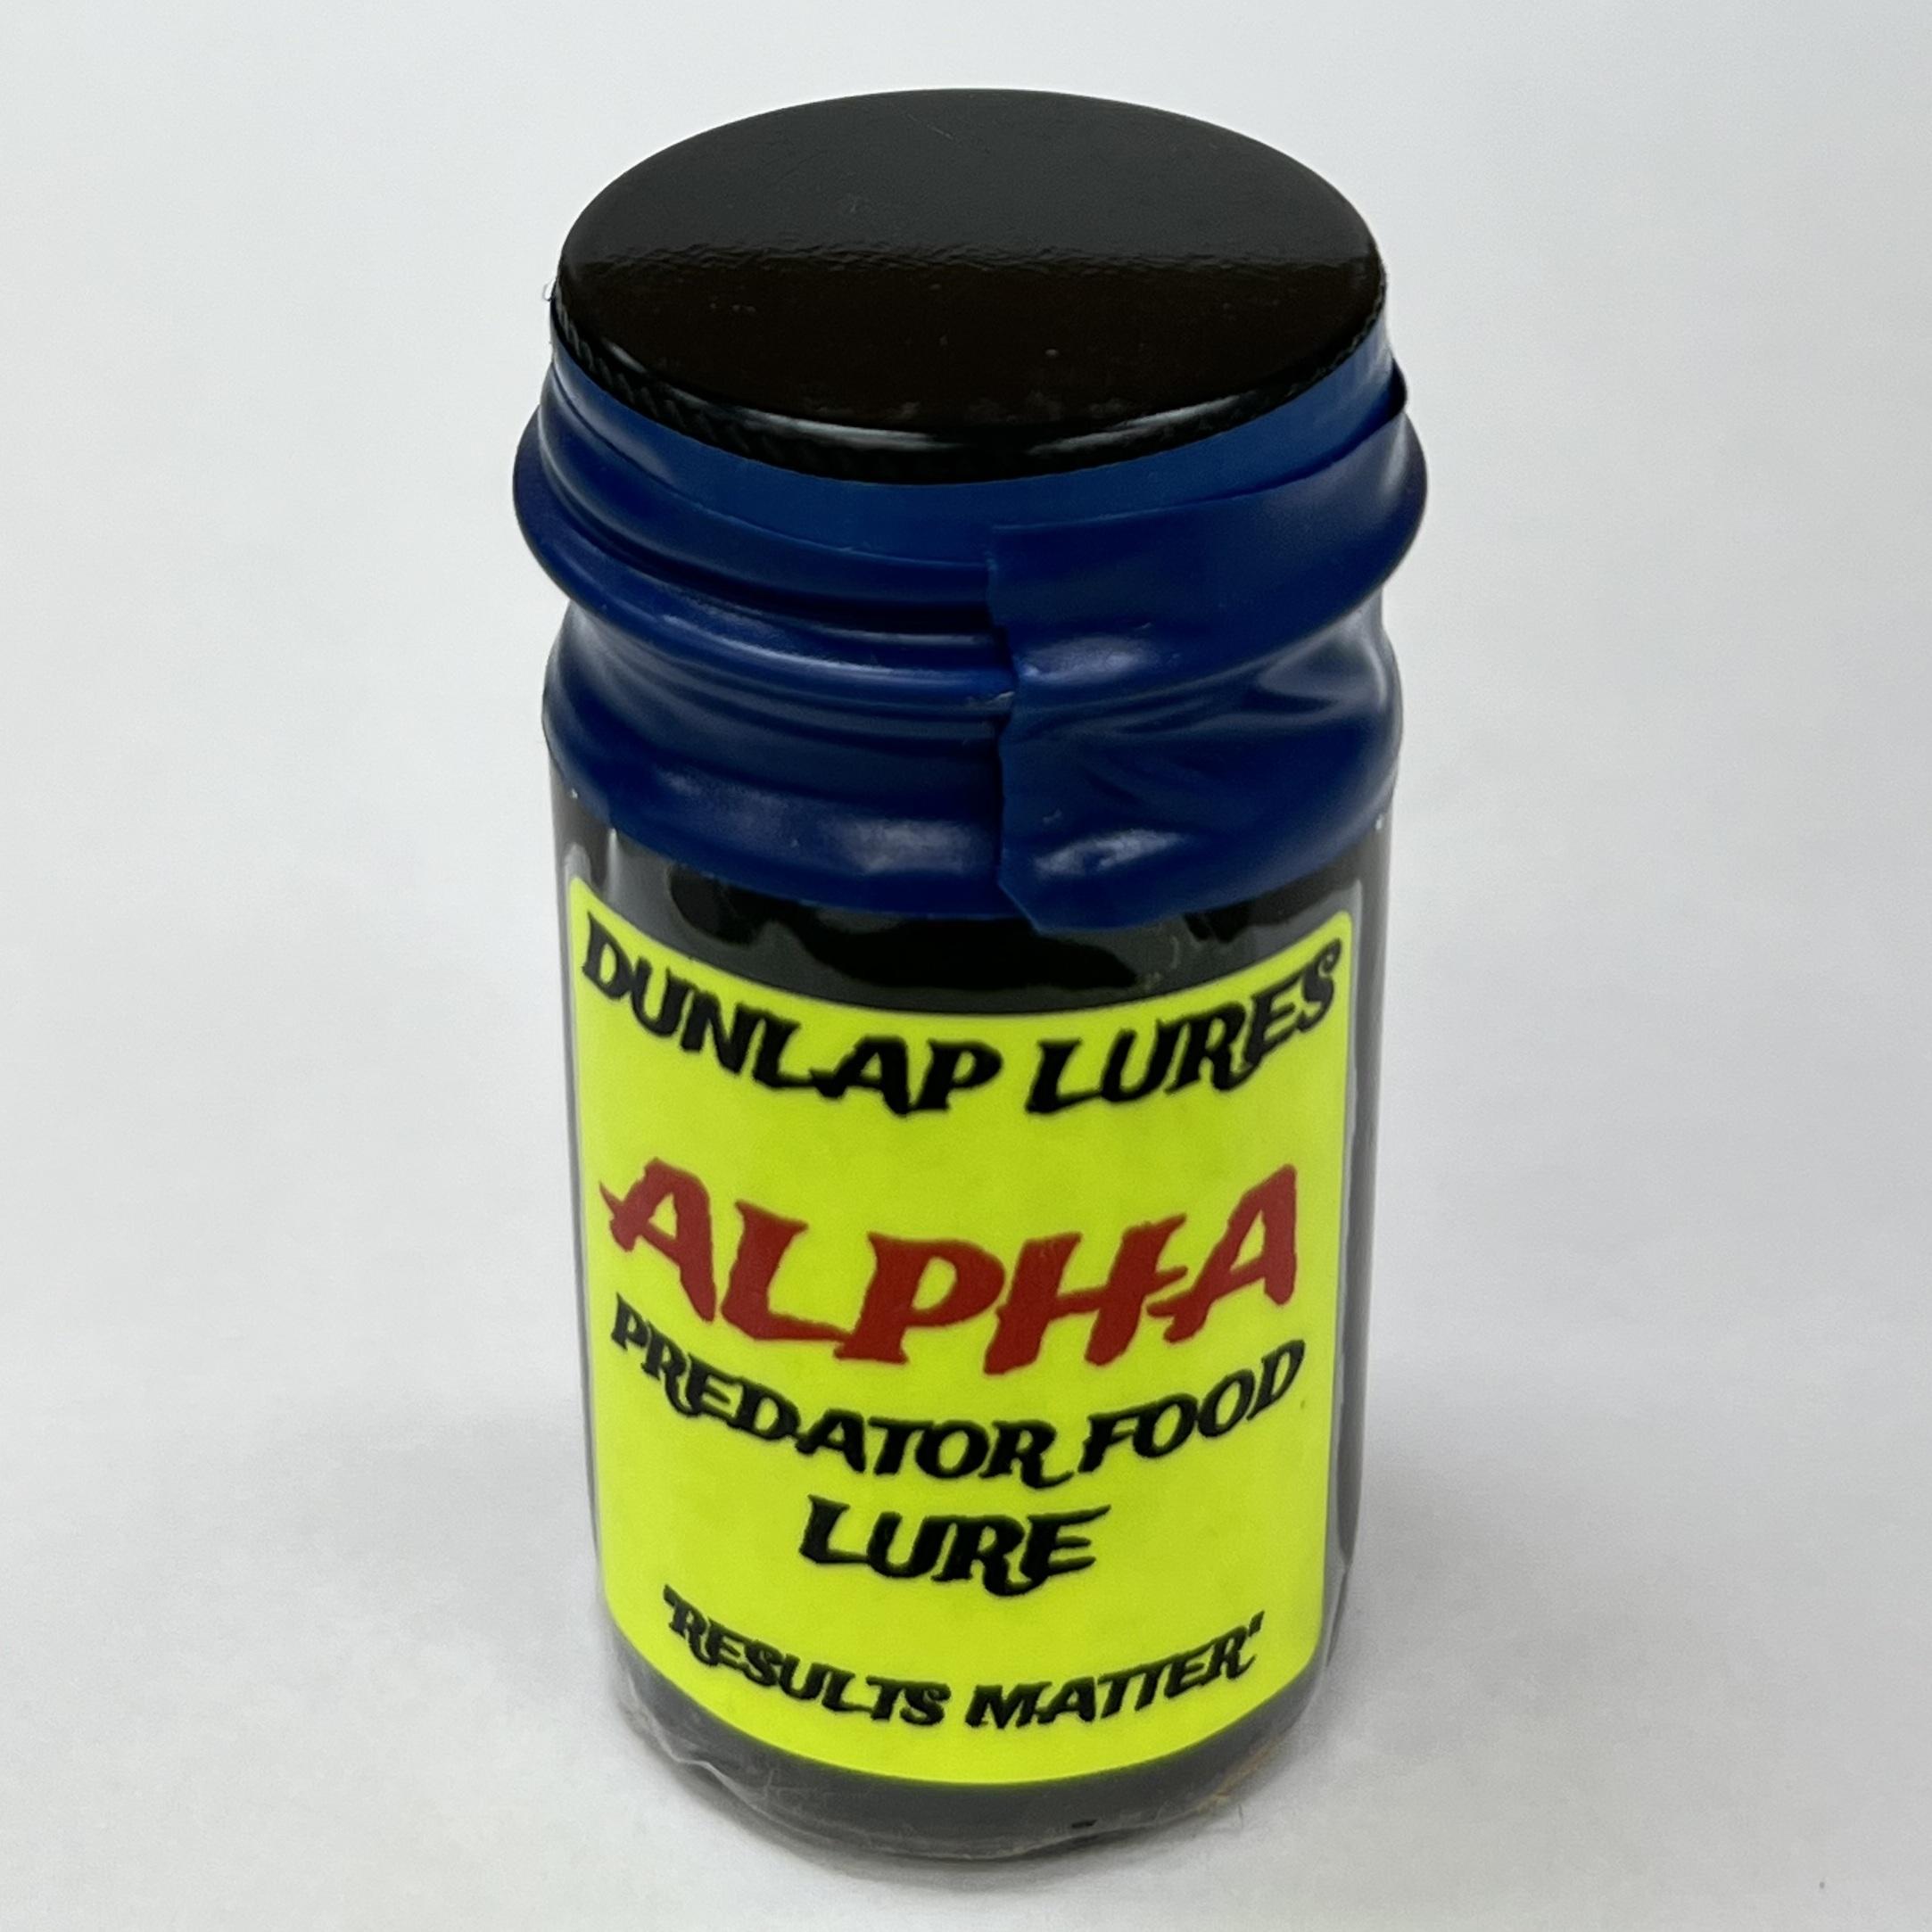 Dunlap Lure - Alpha Predator - 1 oz